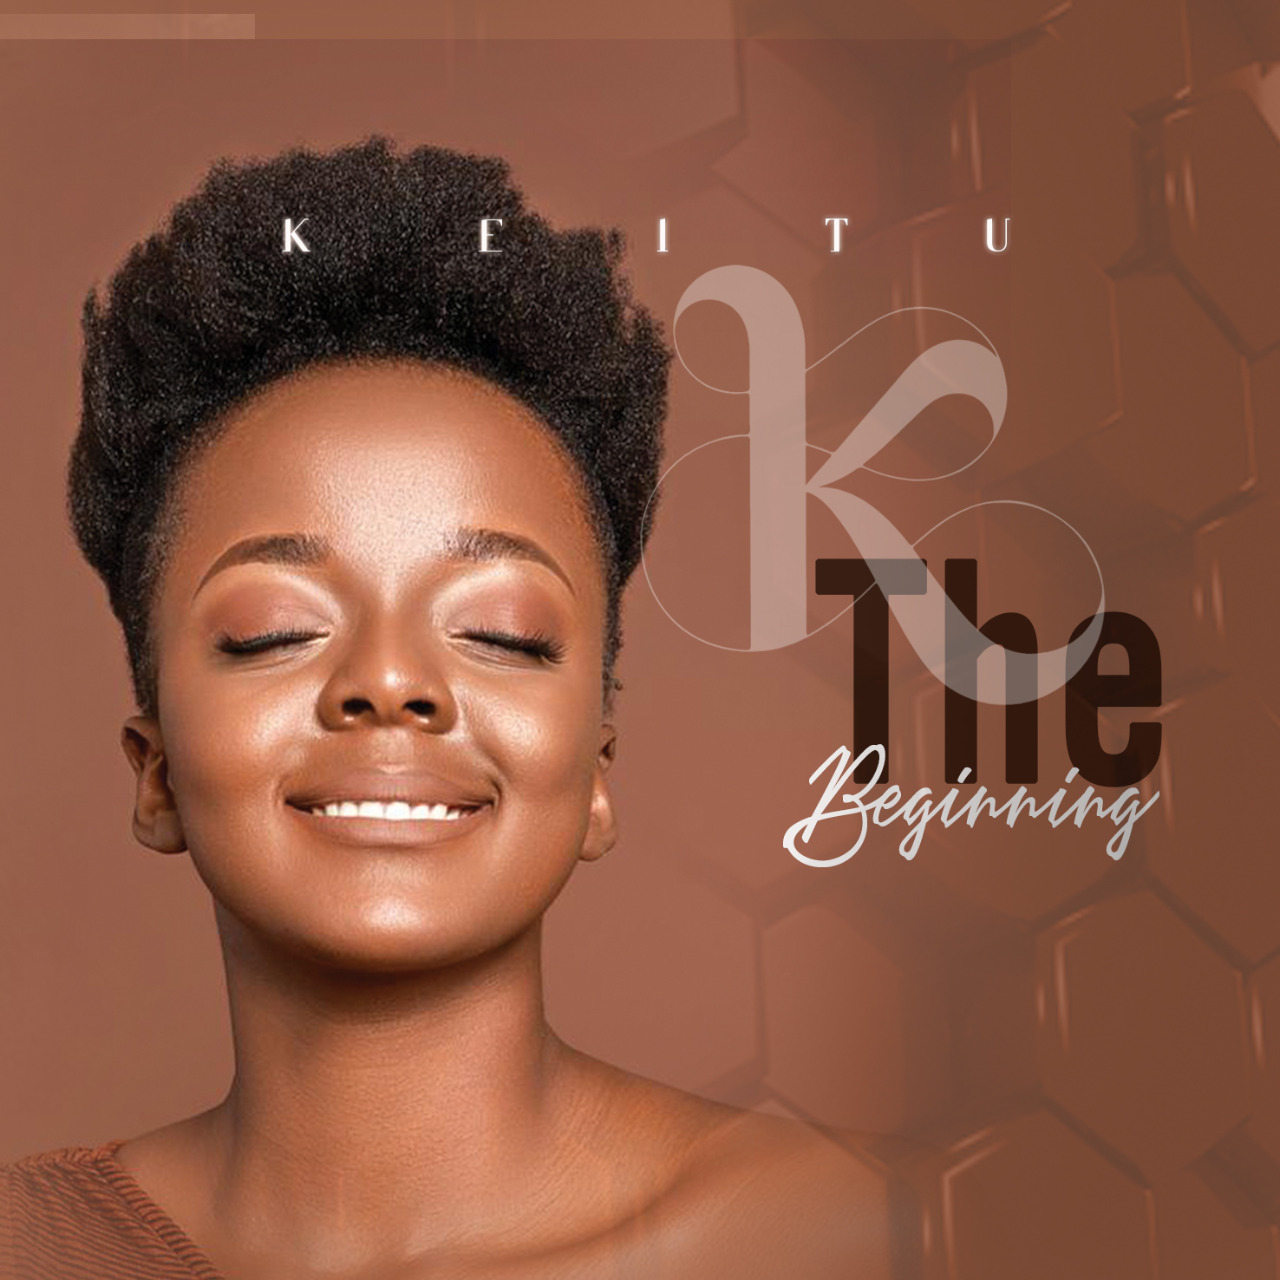 Keitu - The Beginning CD